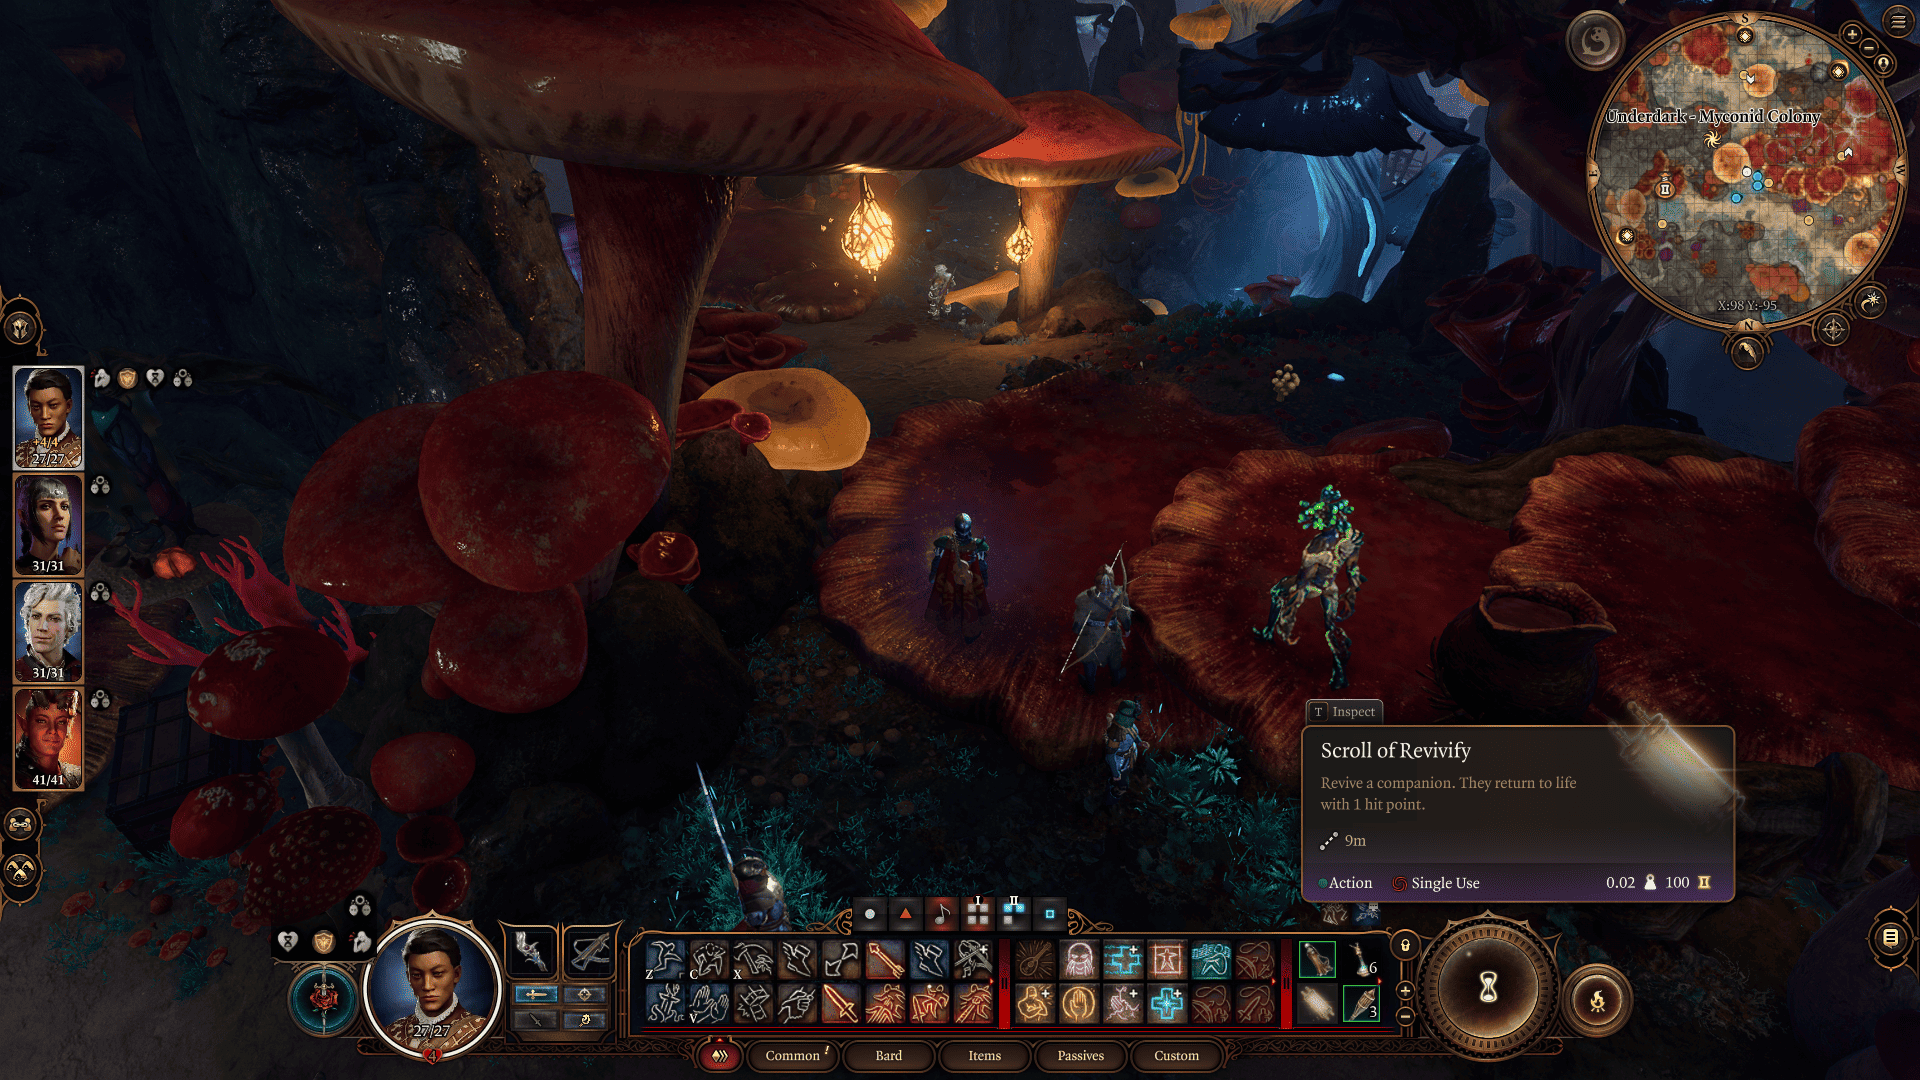 A screenshot of Baldur's Gate 3 showcasing healing and revival mechanics with a mushroom backdrop.